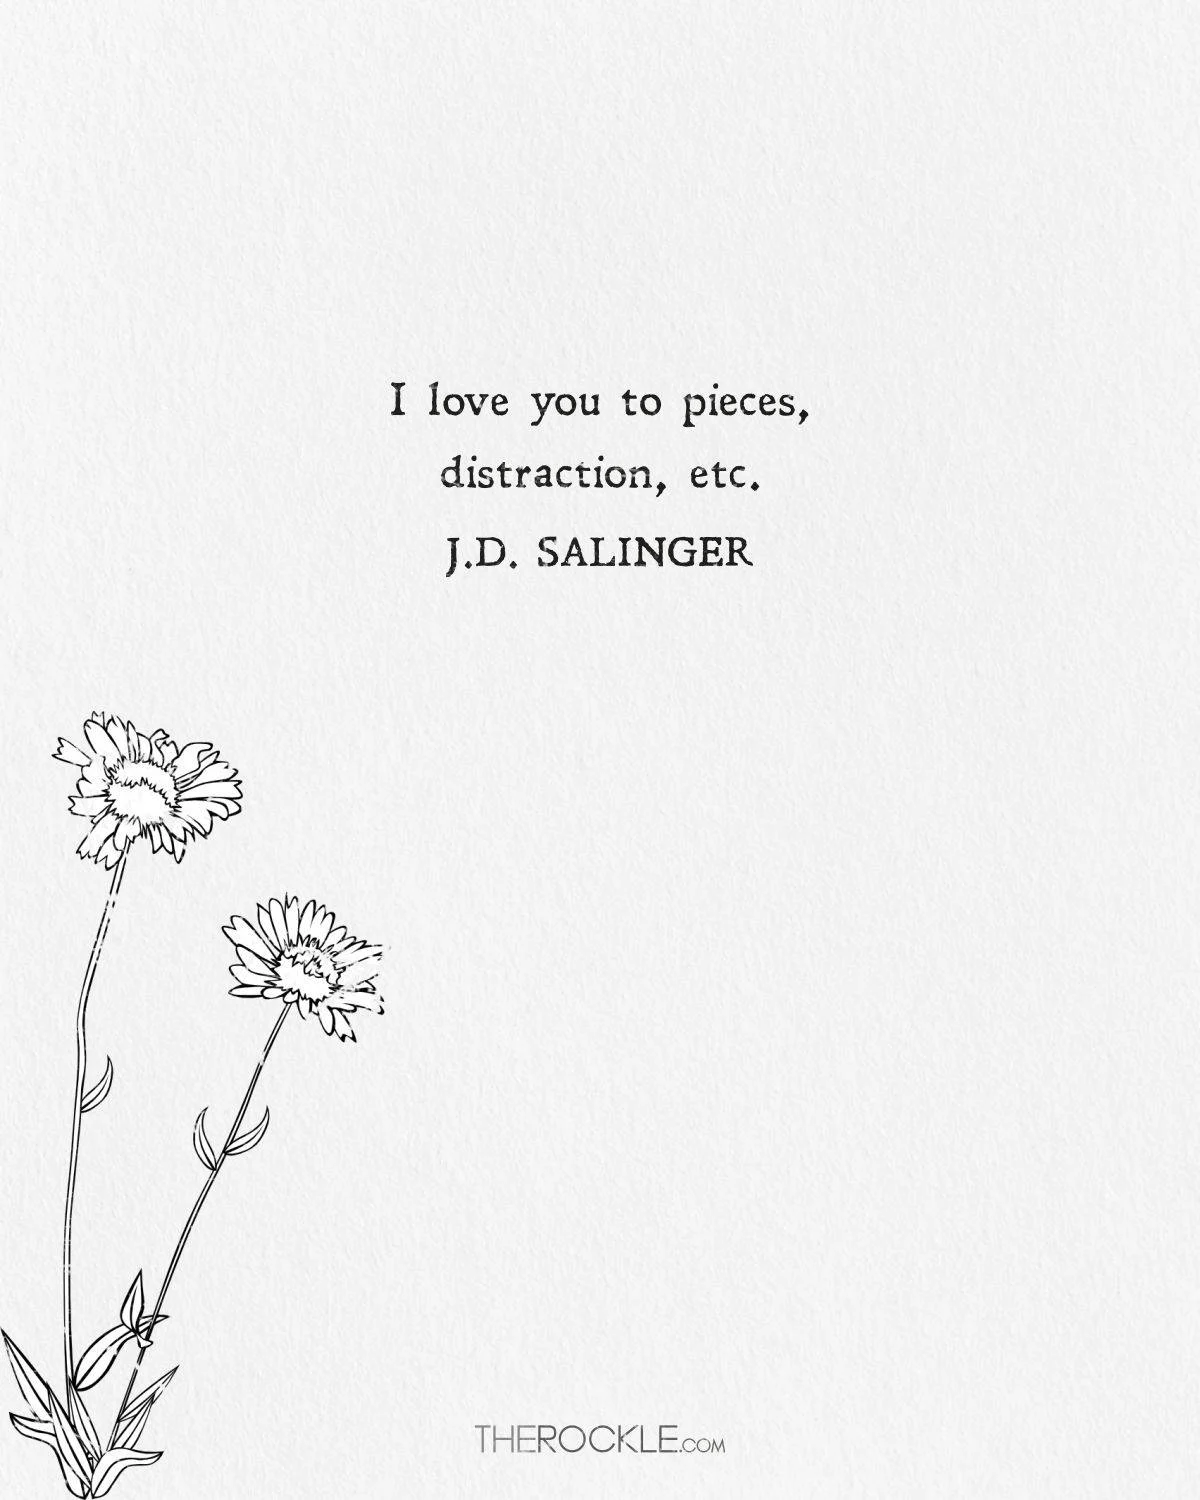 JD Salinger quote